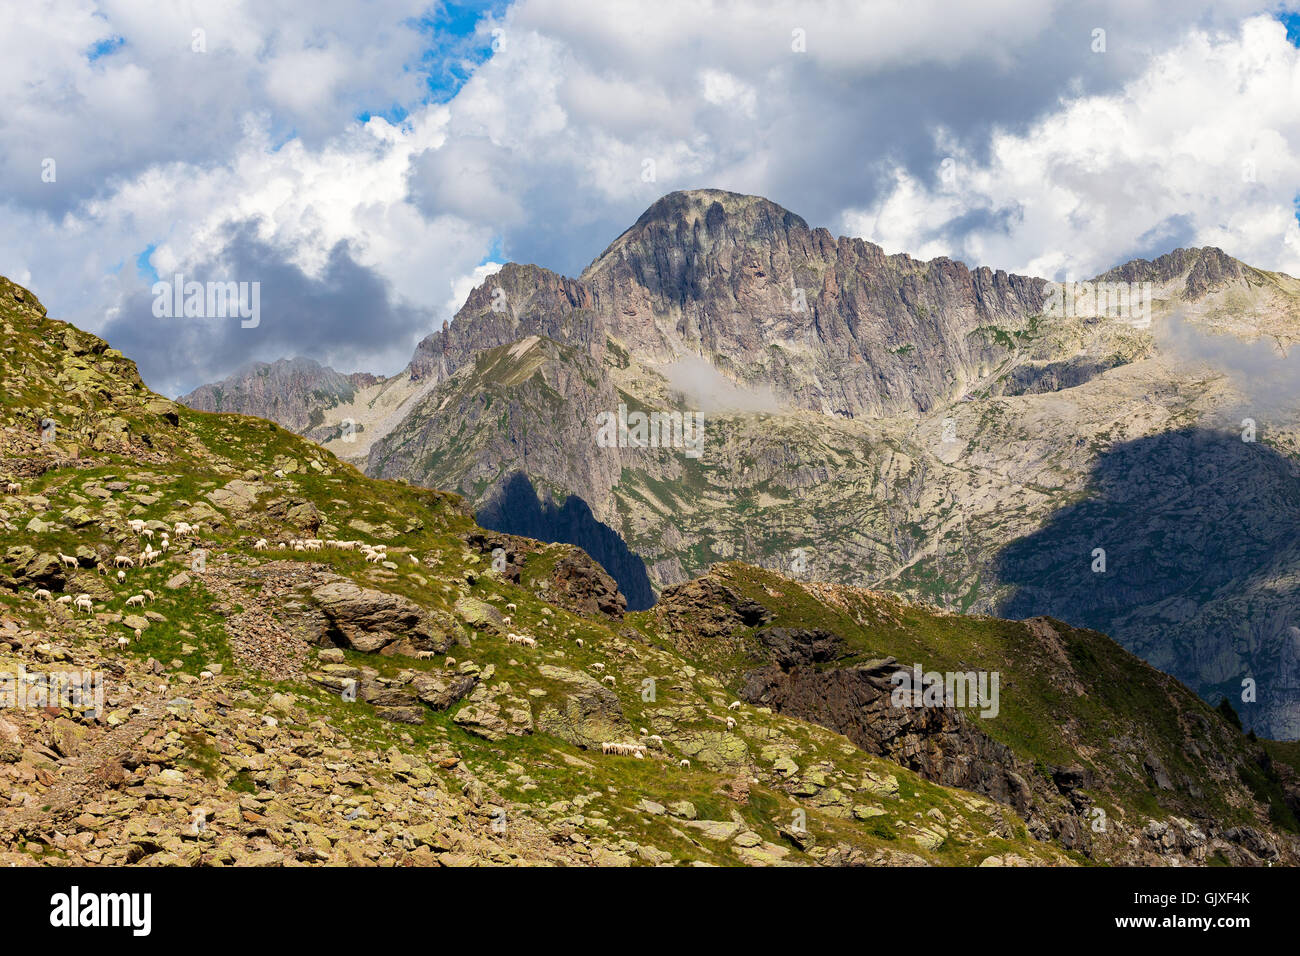 Rocks of Lagorai porphyry group. Behind Cima d'Asta mountain peak. Trentino. Italy. Europe. Stock Photo